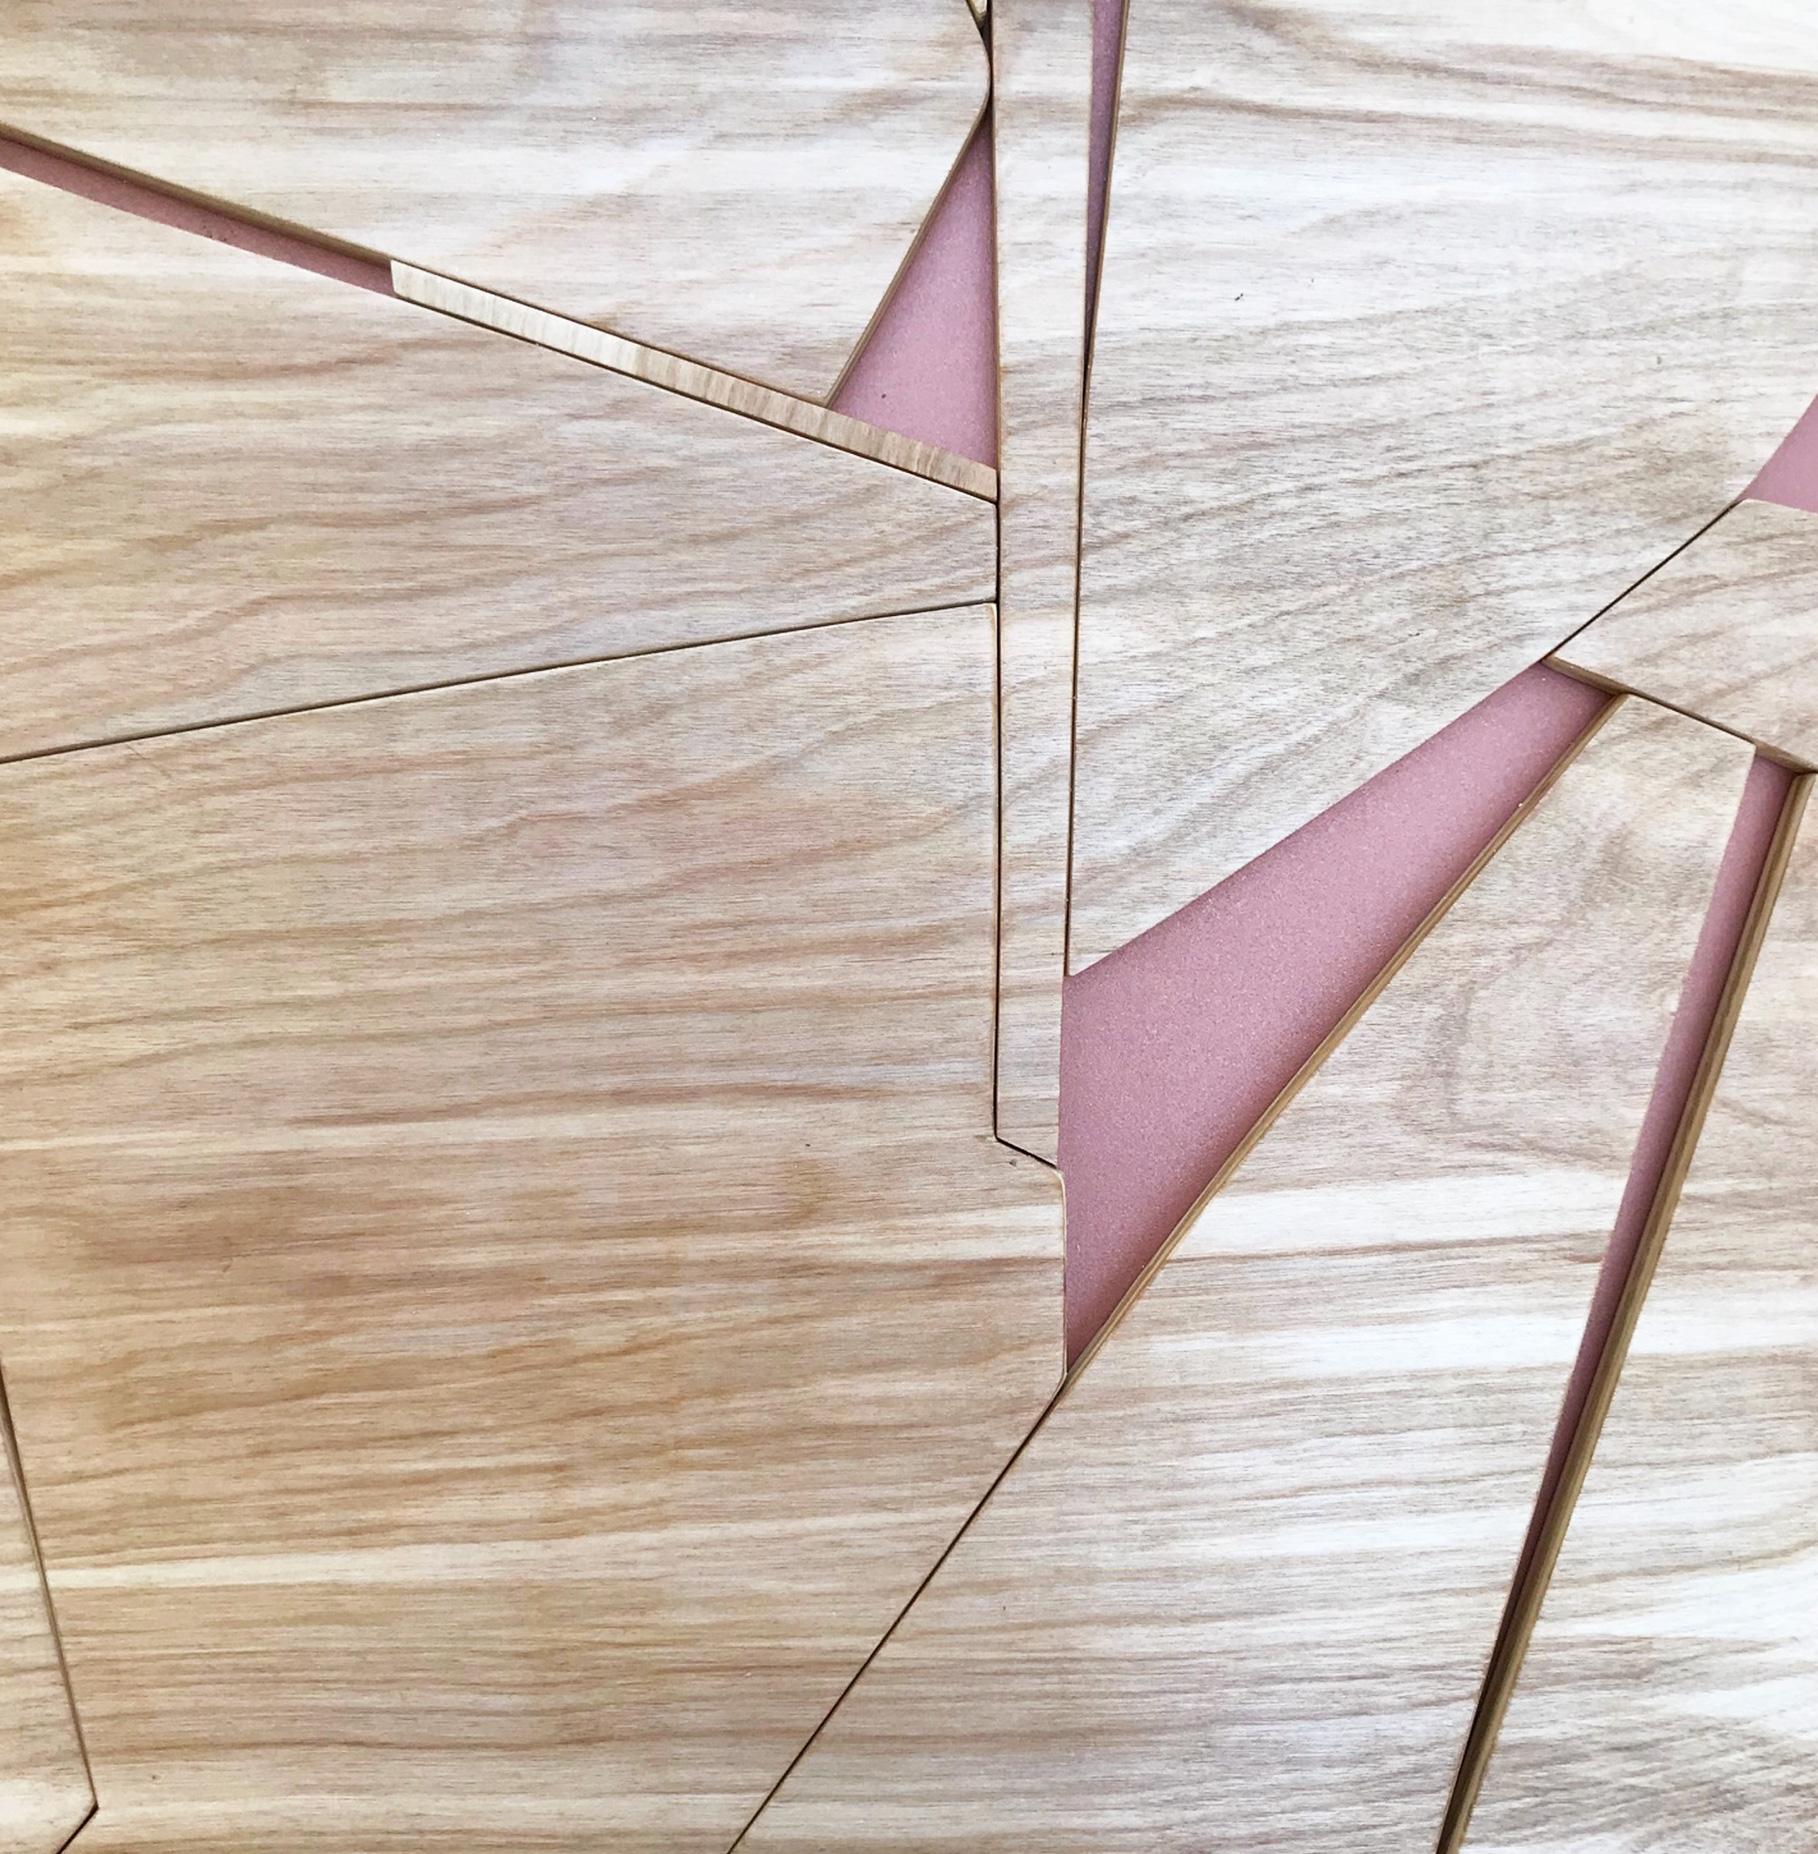 Zephyr II (monochrome abstract sculpture minimal geometric design natural wood) - Minimalist Painting by Scott Troxel